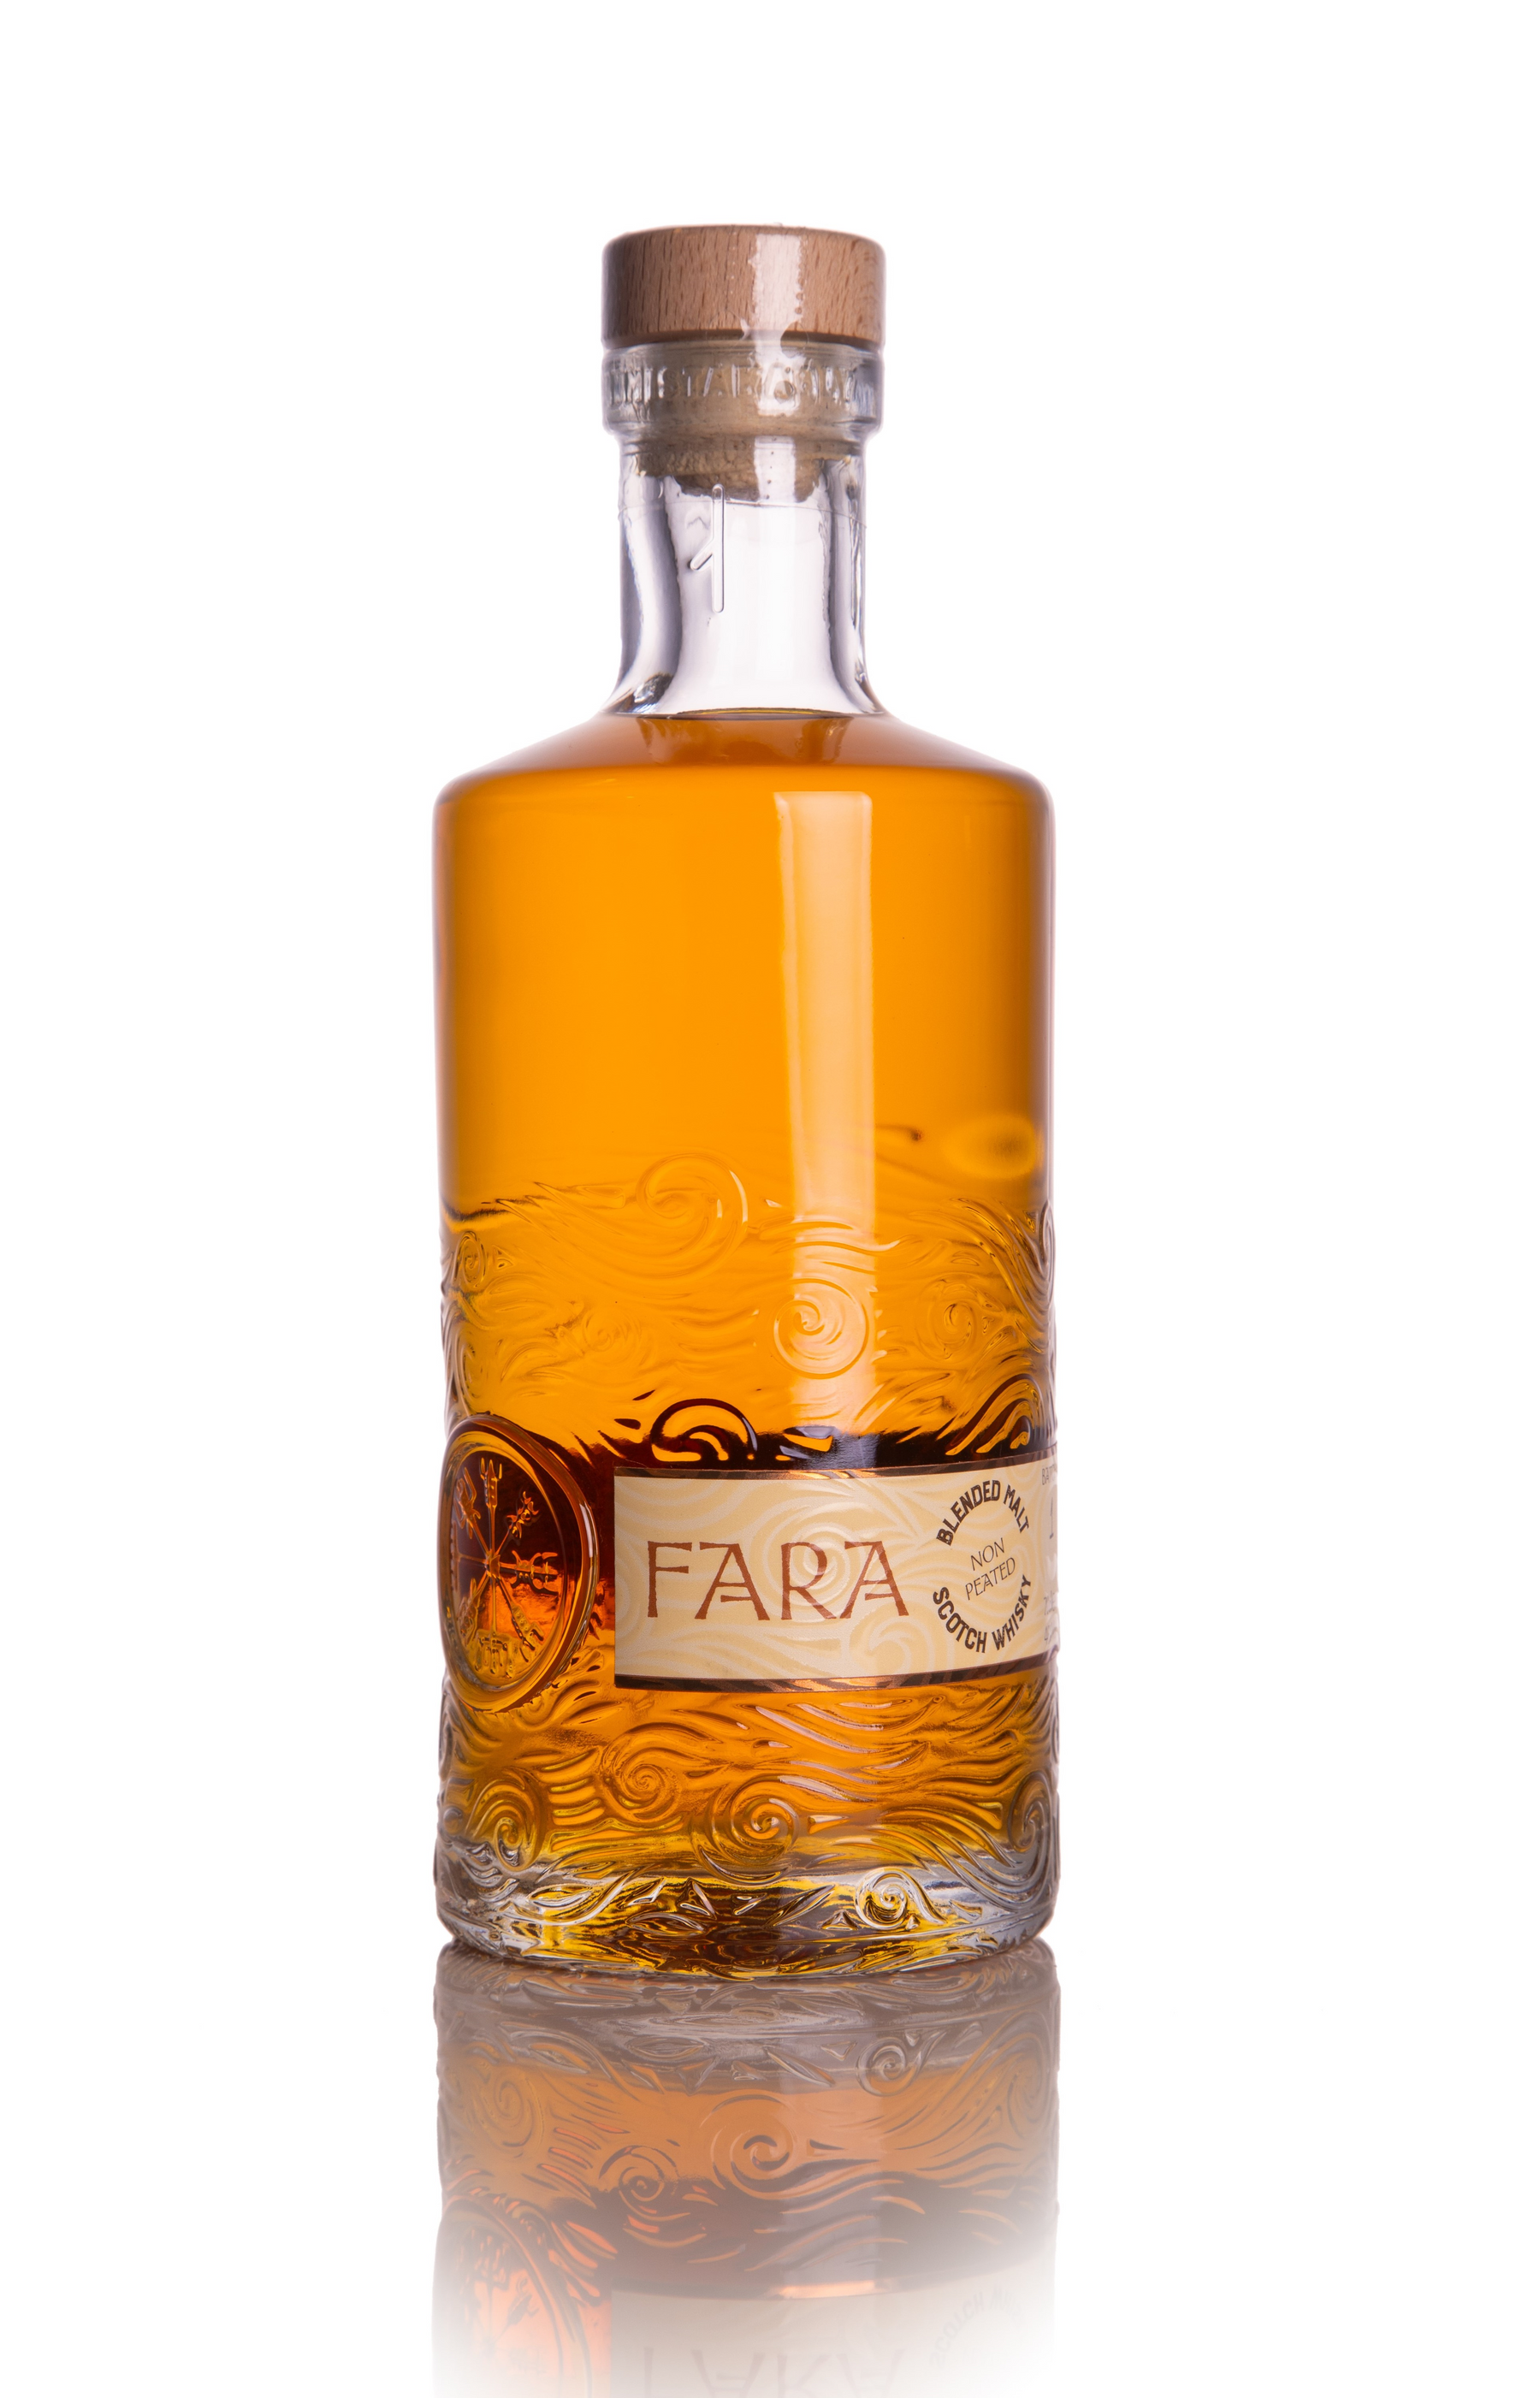 Fara - Blended Malt Scotch Whisky - 70cl